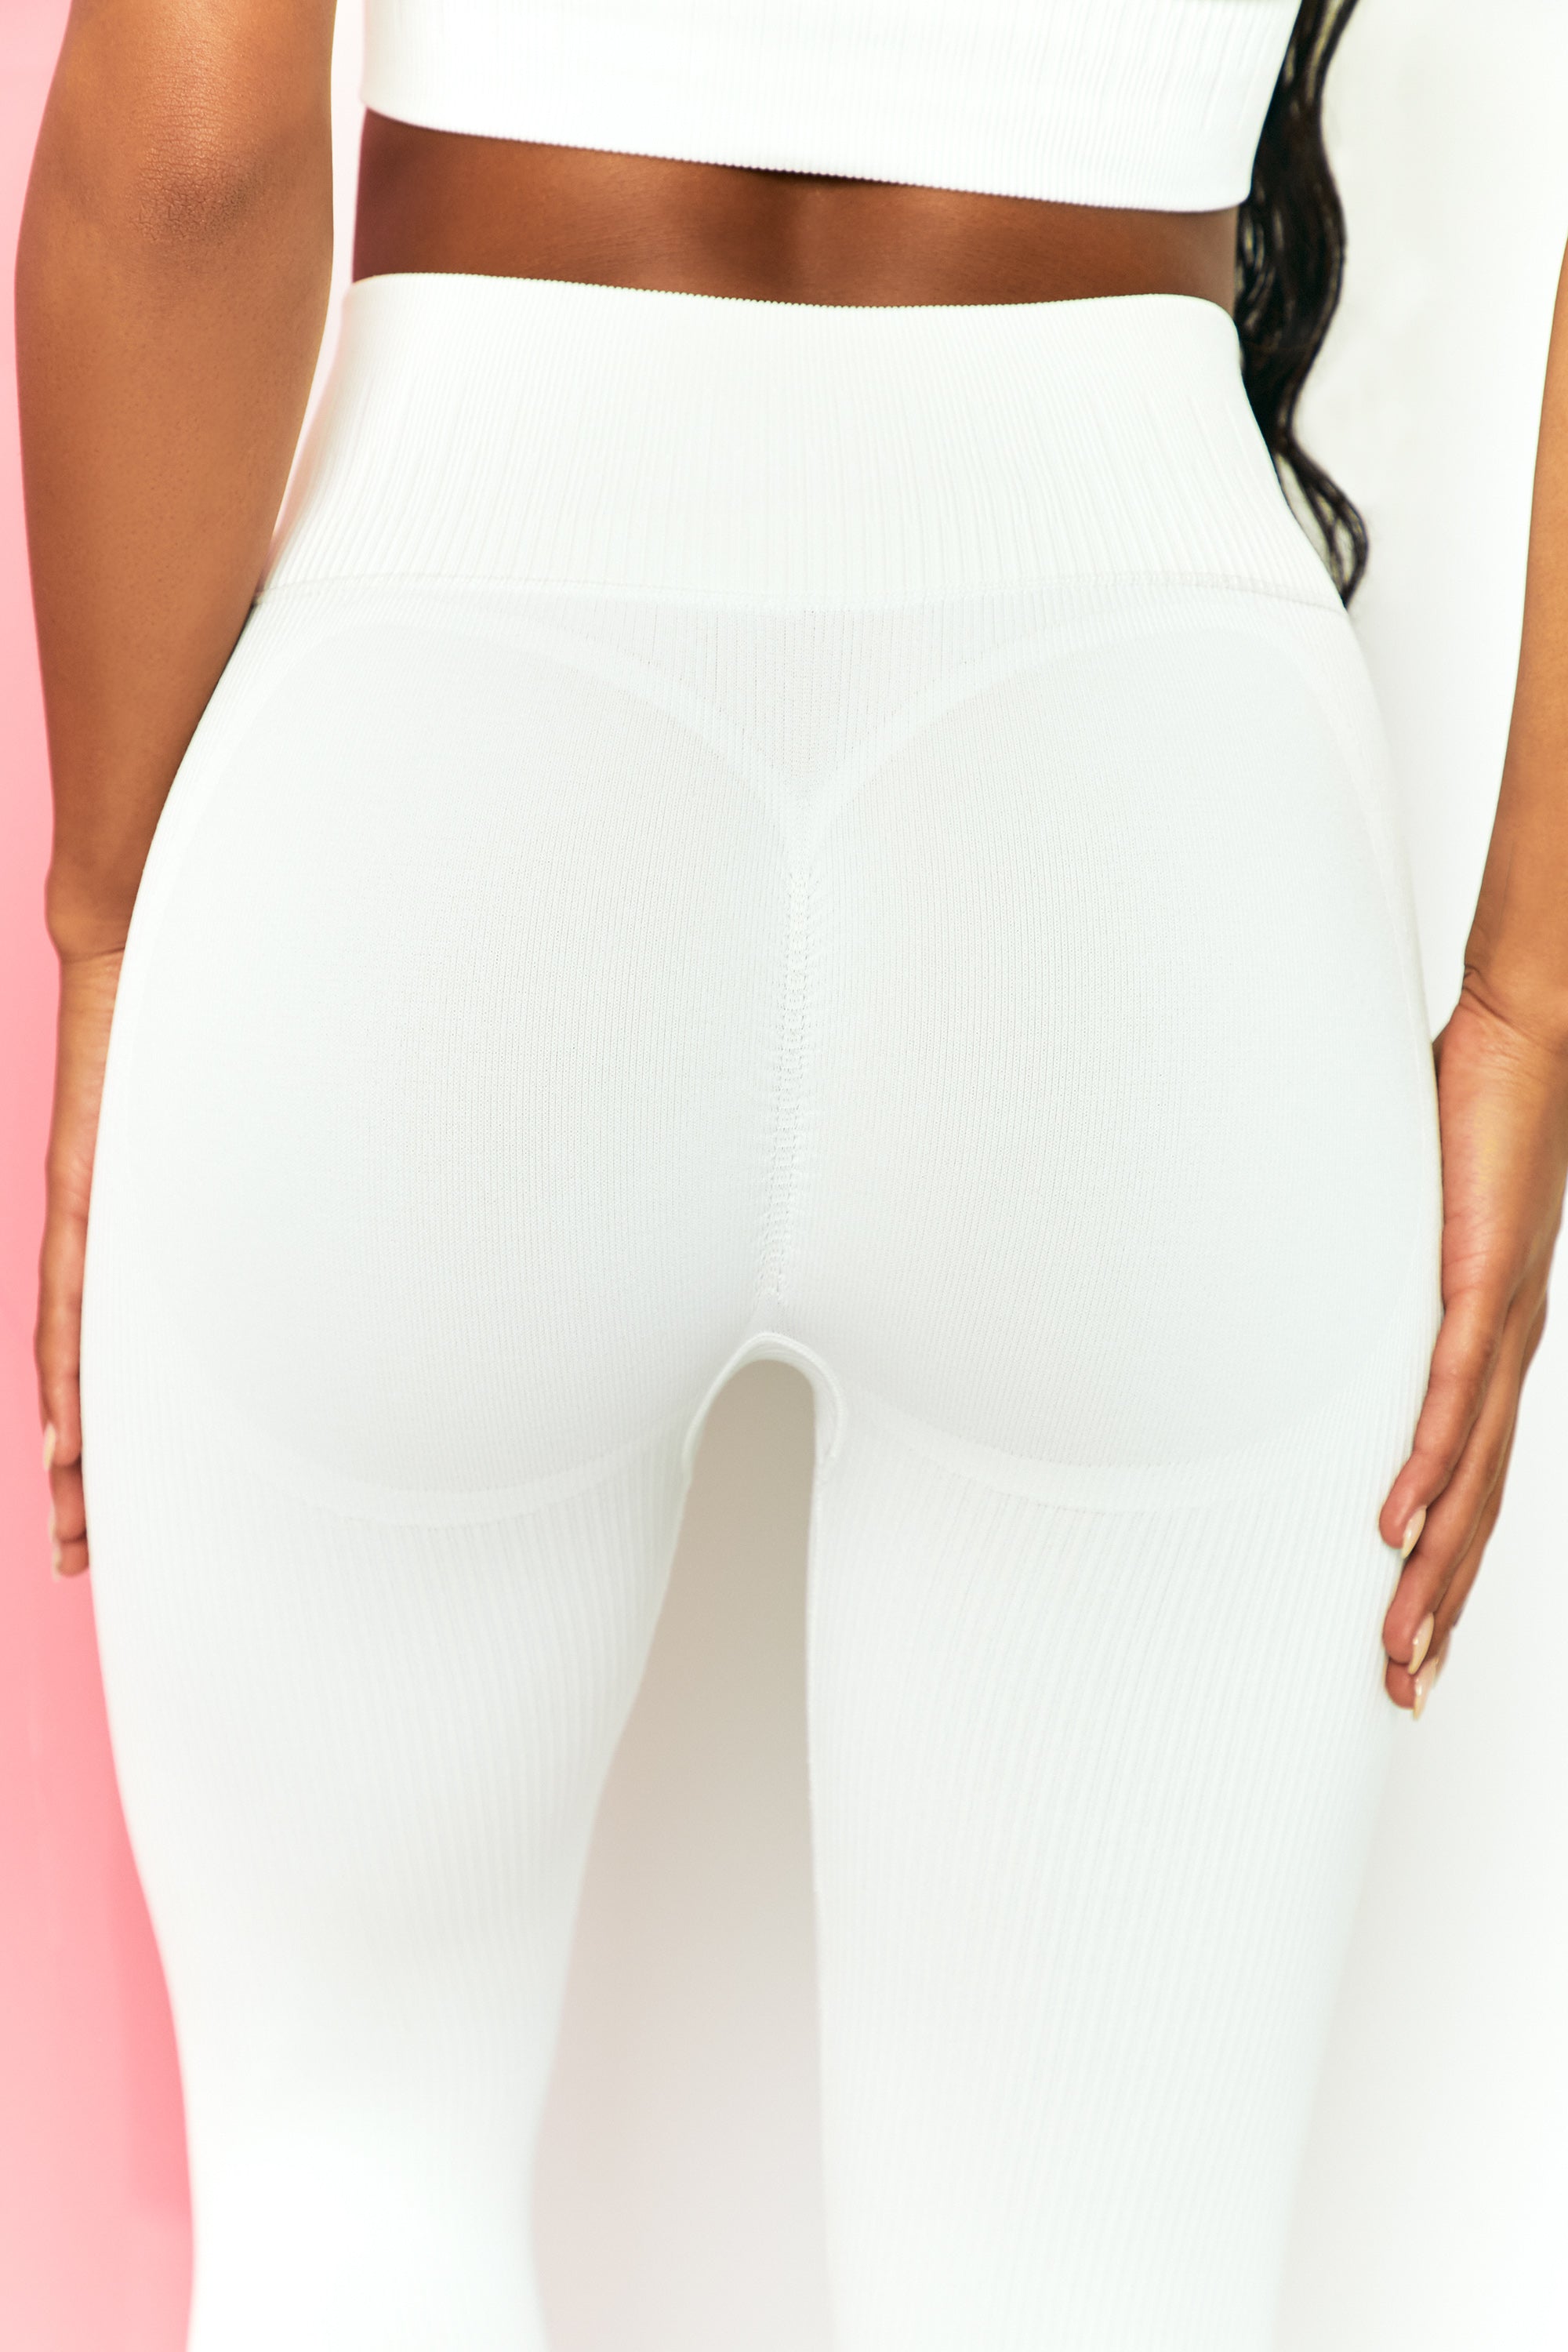 $195 Port De Bras Women's White Stelle Ruched Drawstring Leggings Pants  Size M